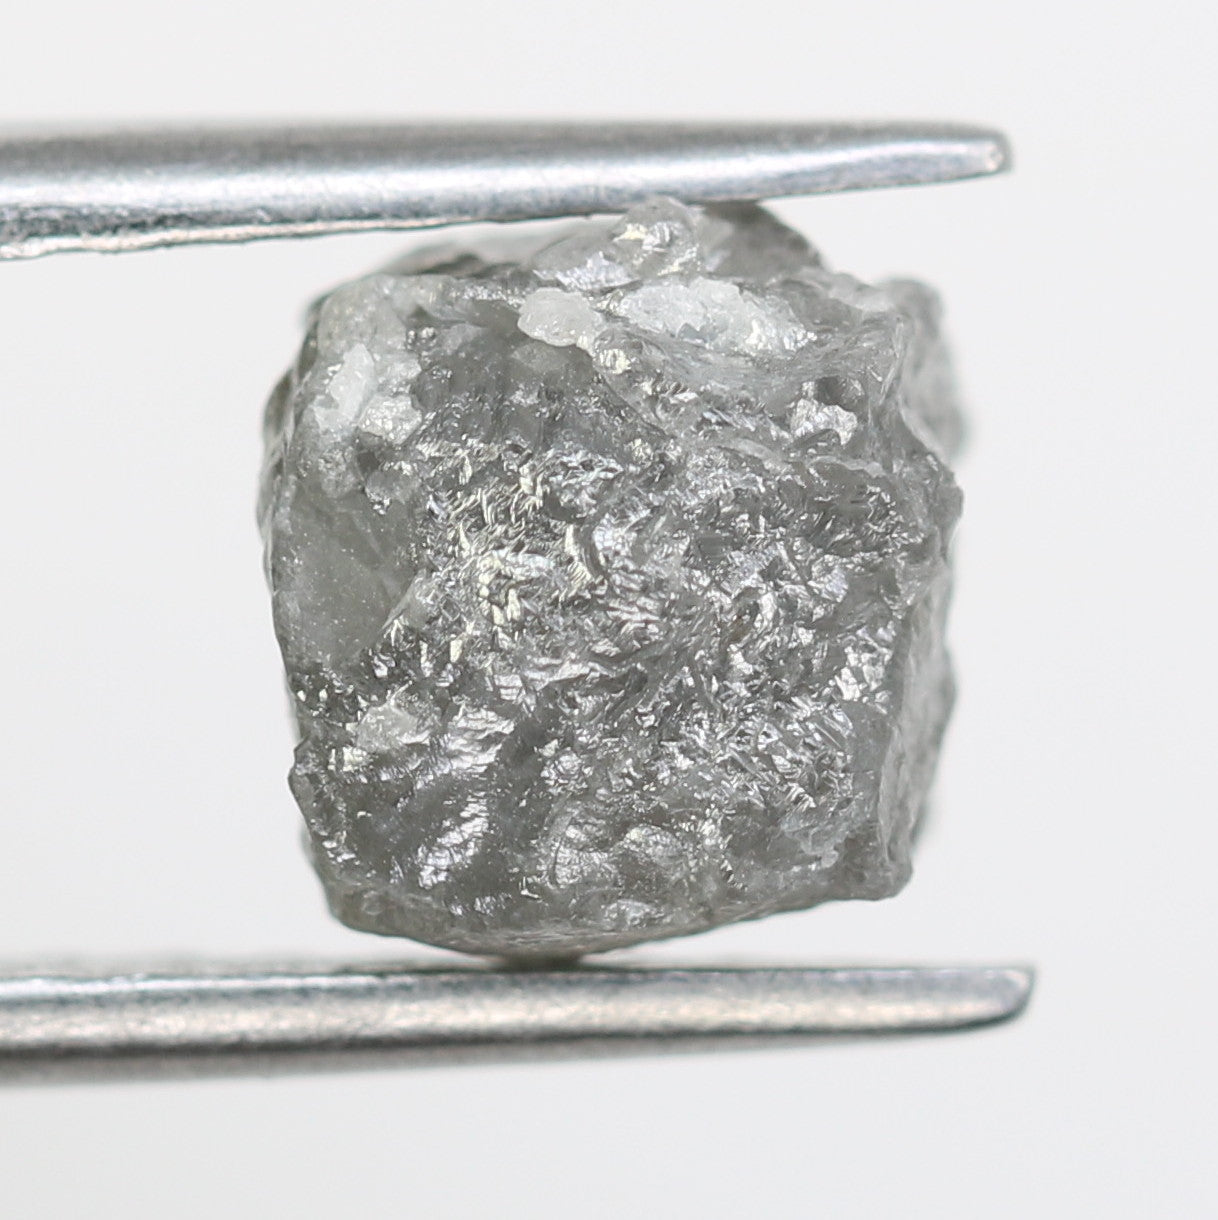 3.35 CT Grey Natural Raw Rough Irregular Cut Diamond For Engagement Ring